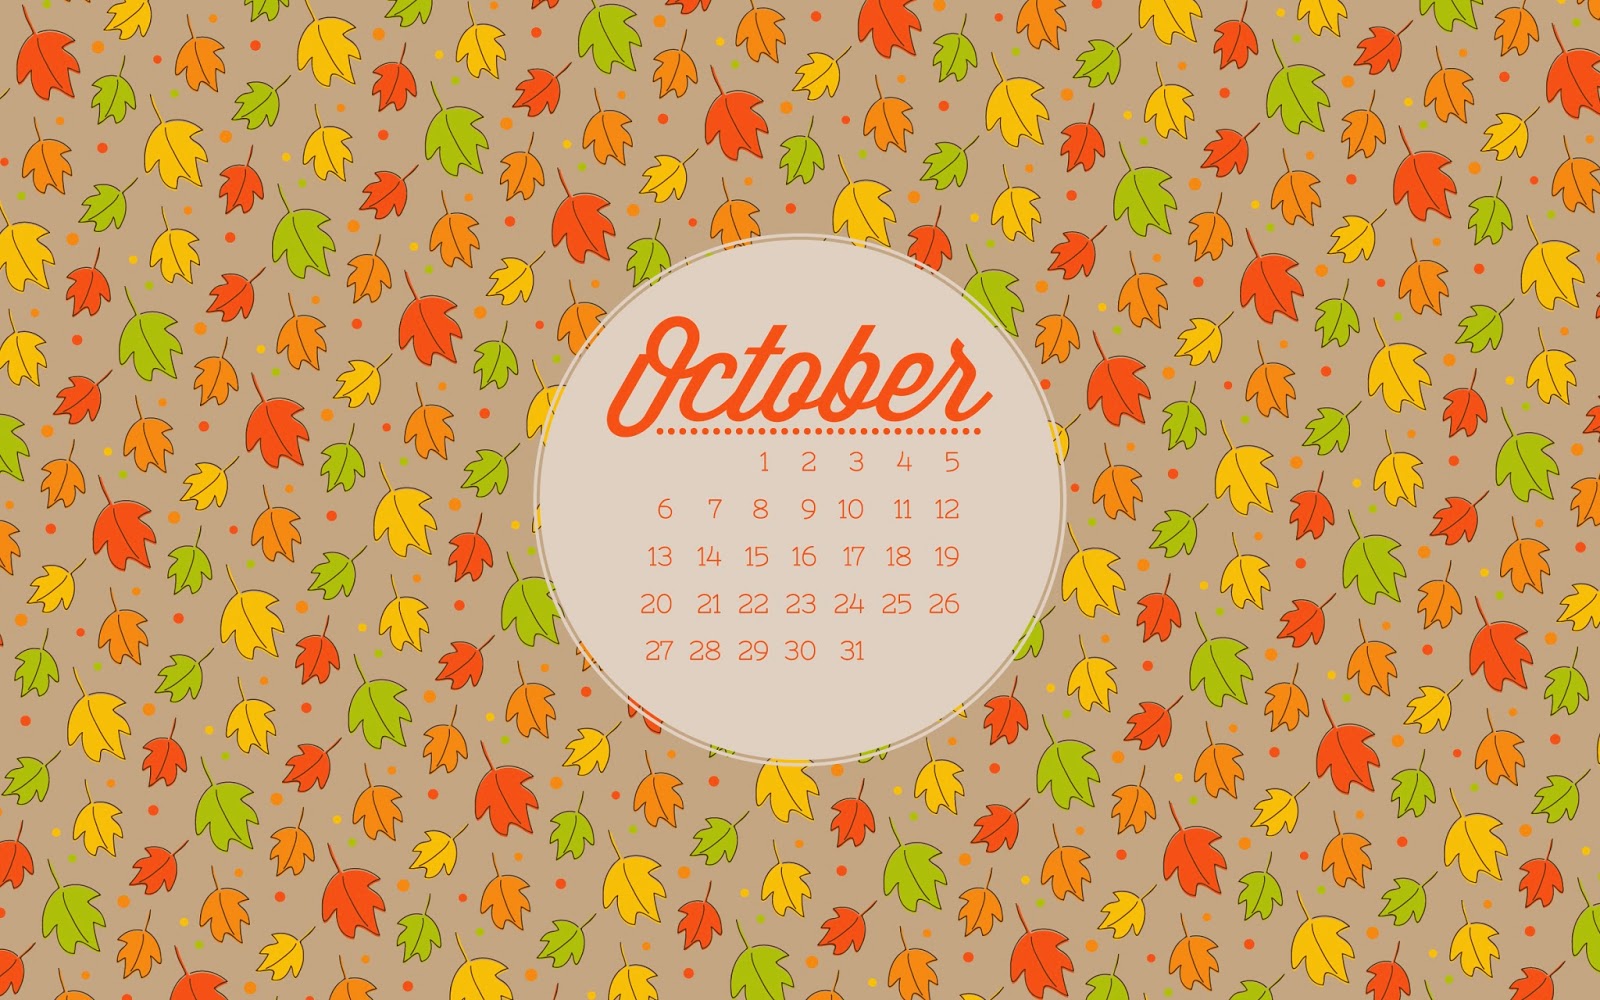 october 2017 desktop wallpaper calendar 1280x1024